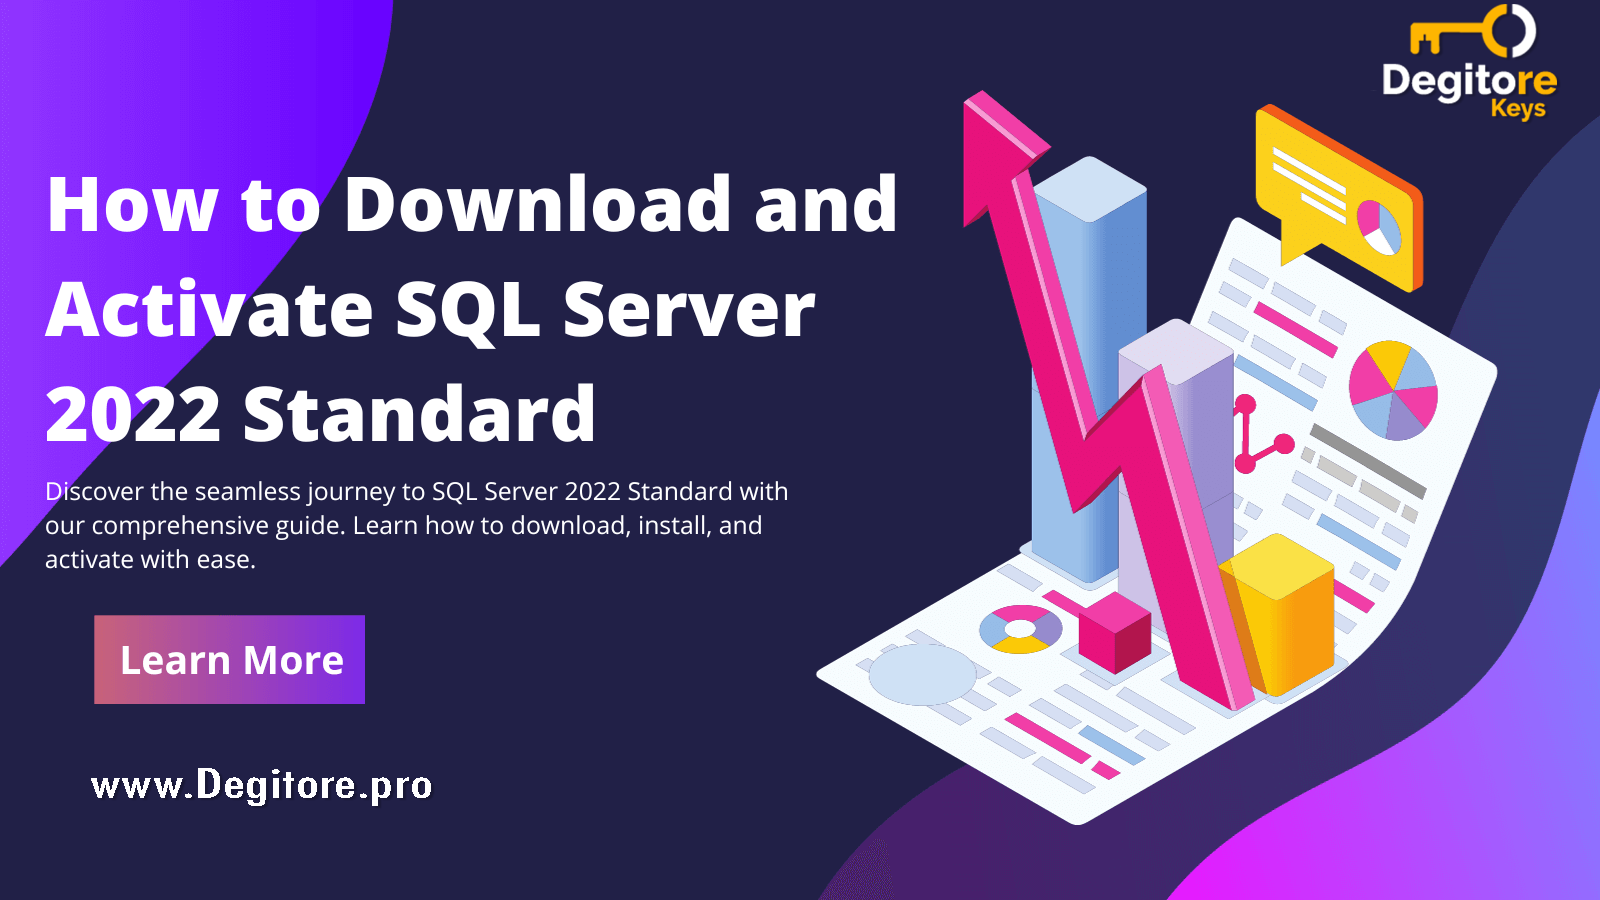 Downloading SQL Server 2022 Standard ISO from Microsoft